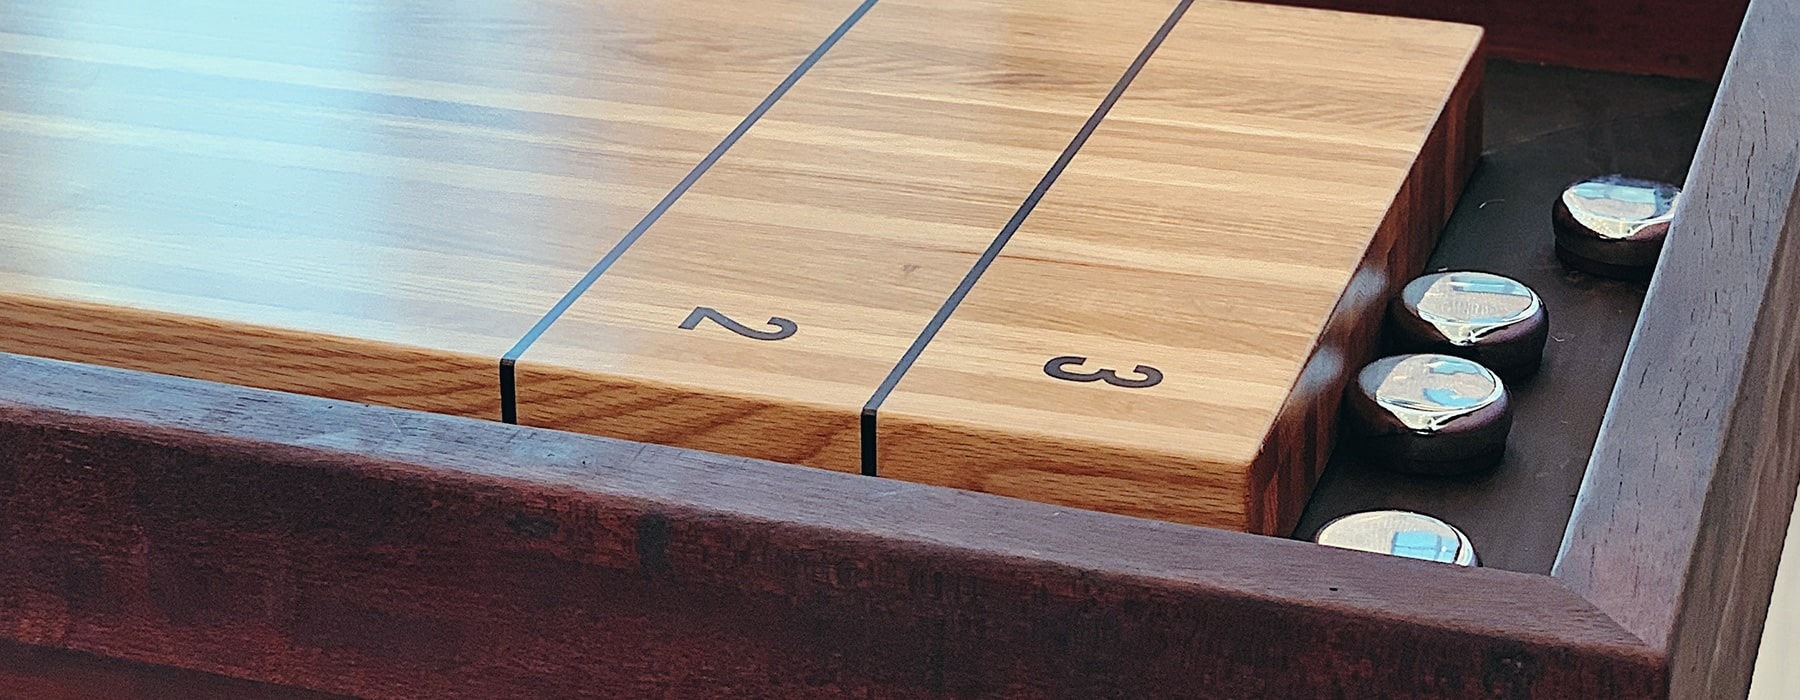 close-up of shuffleboard table